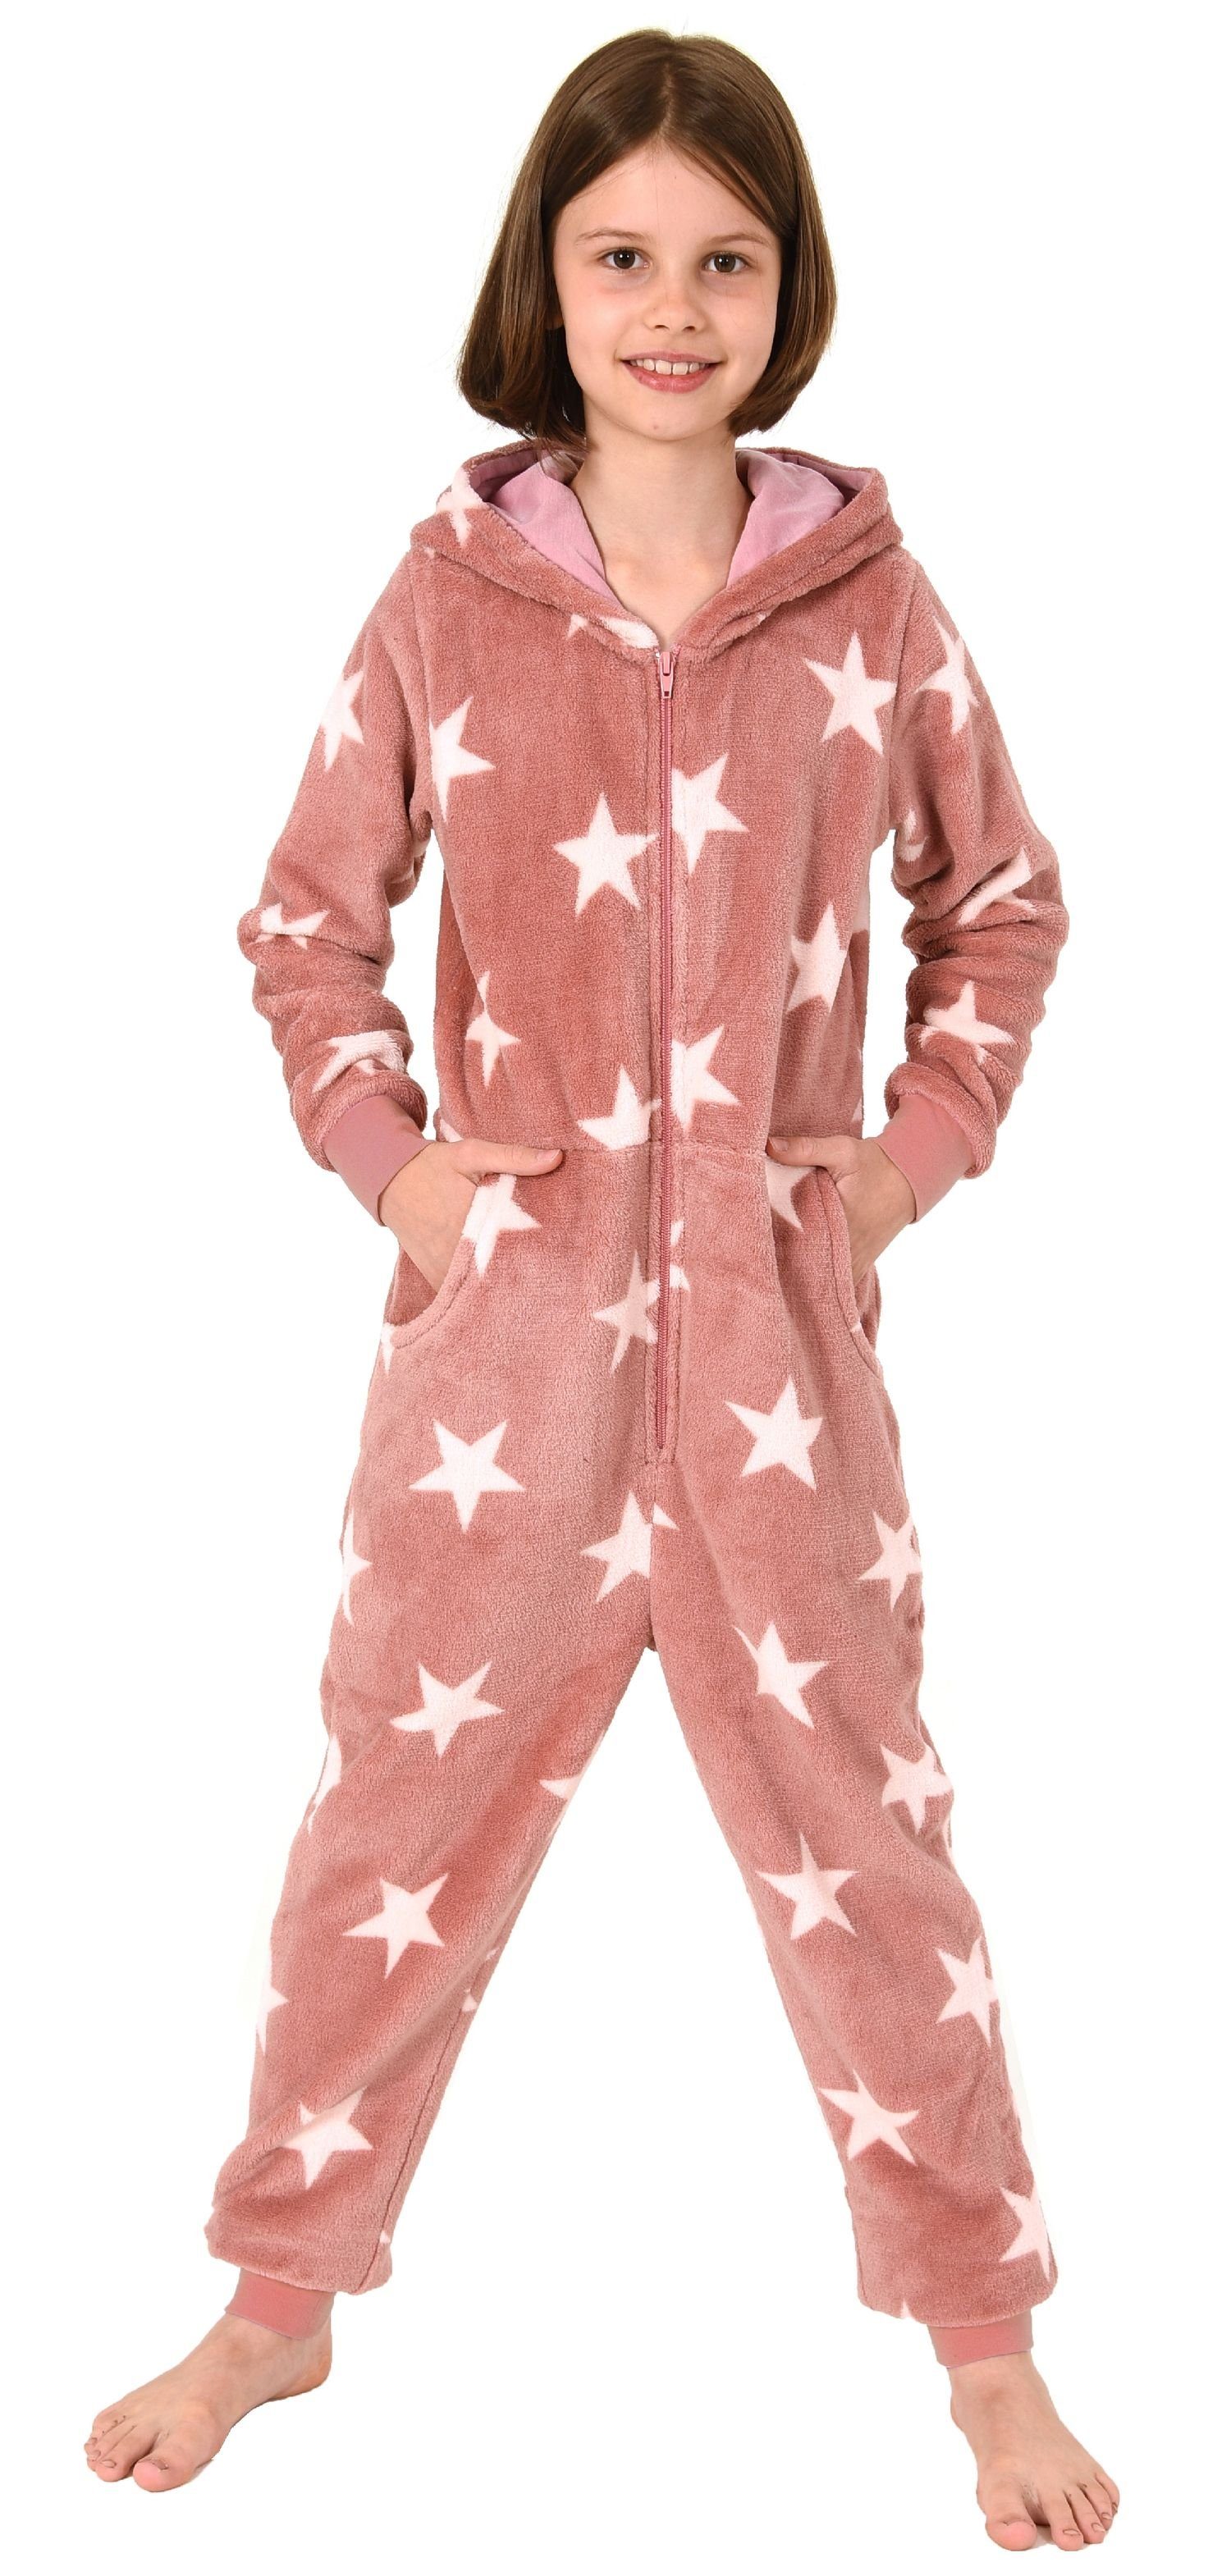 Normann Pyjama Mädchen Jumpsuit Overall Schlafanzug langarm Sternenmotiv rose